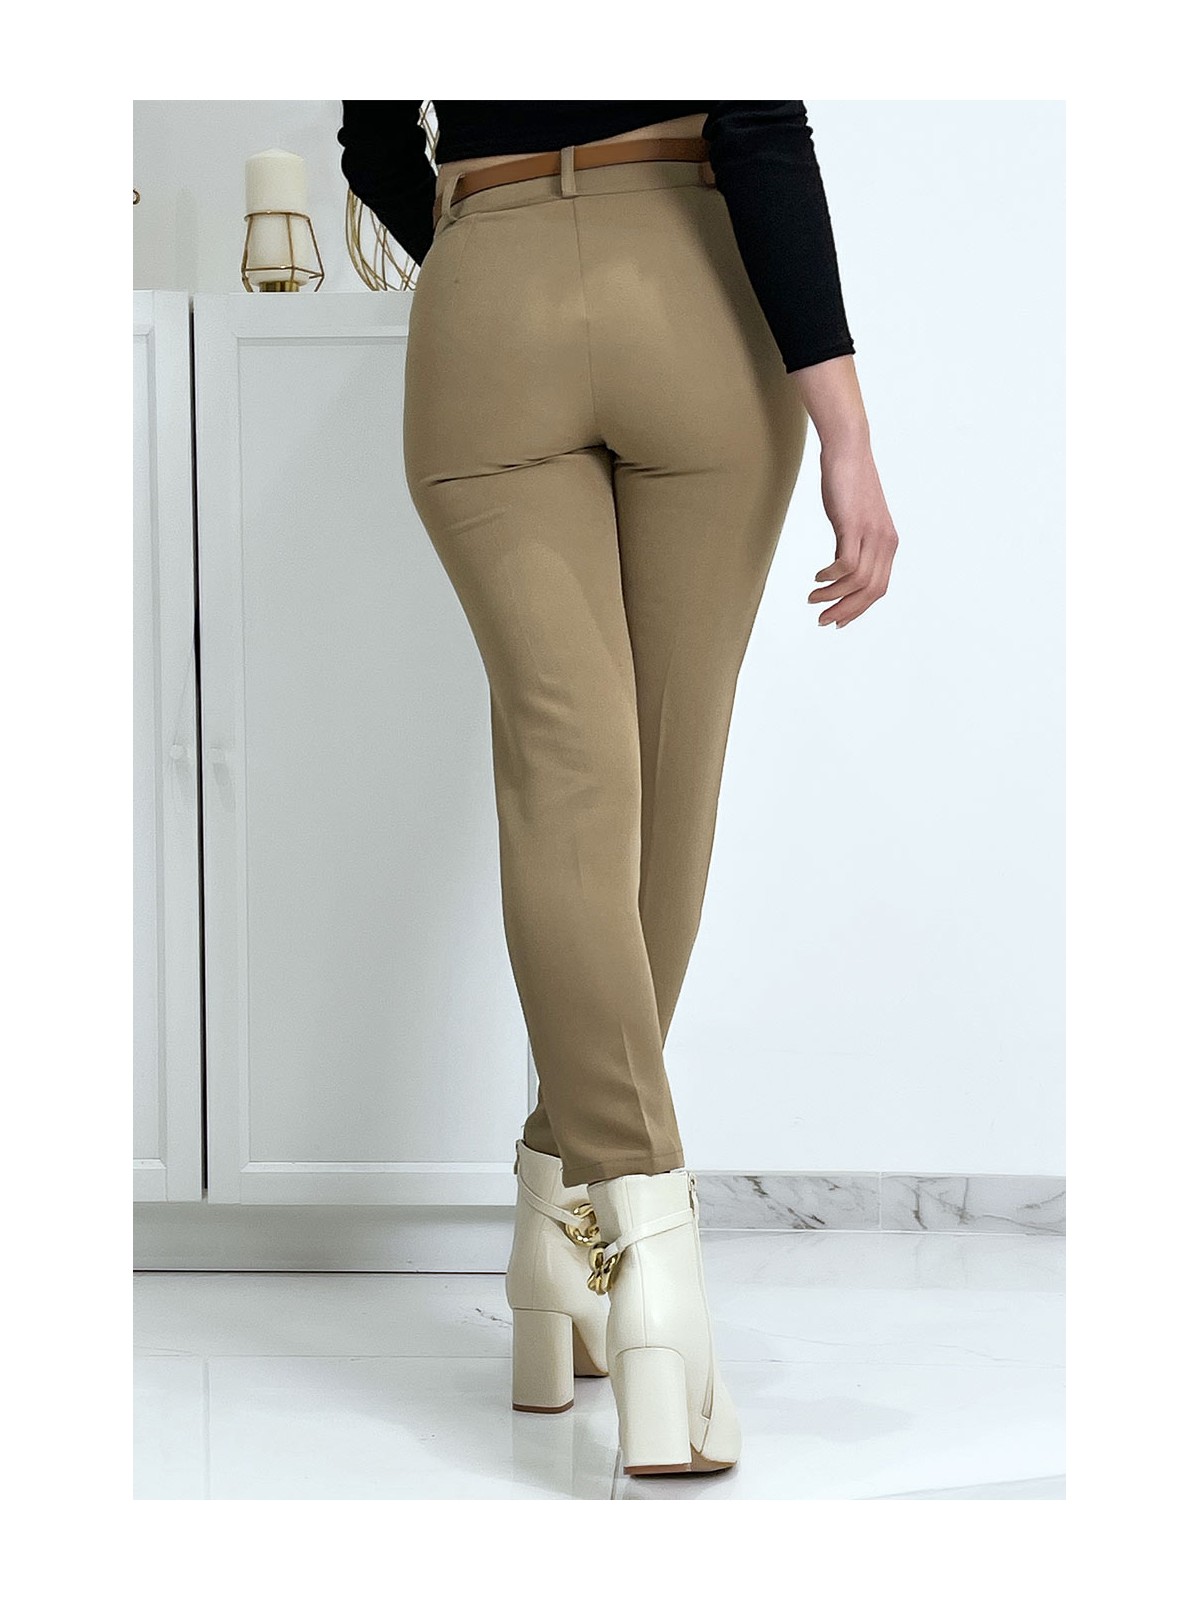 Pantalon working girl camel avec poches et ceinture - 5